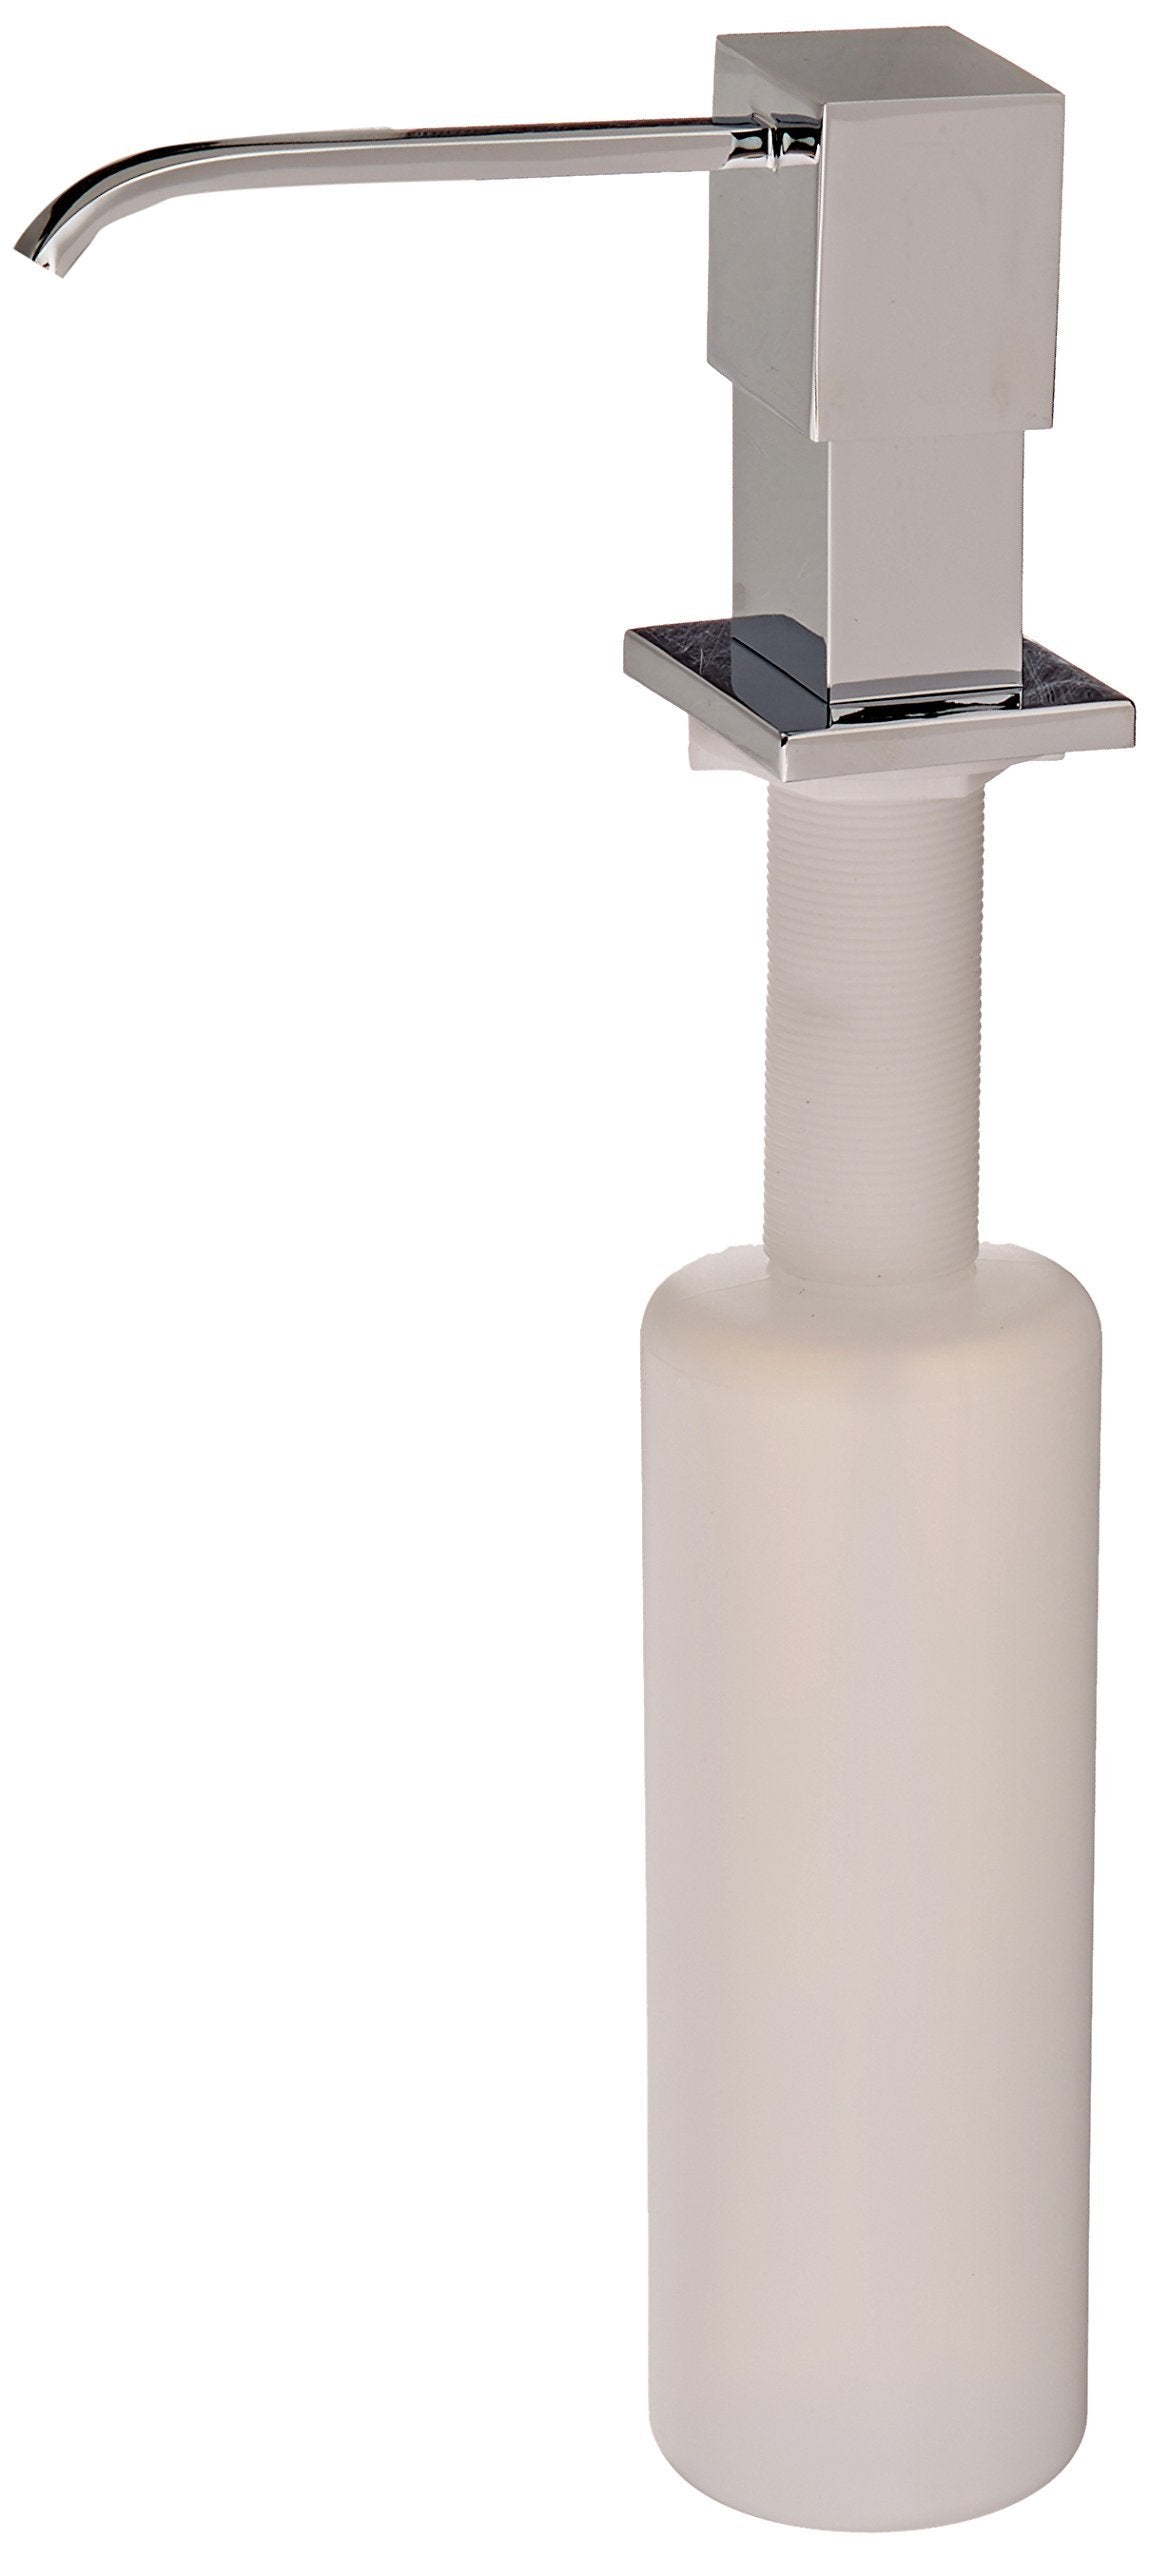 Gerber D495944 Chrome Sirius Soap & Lotion Dispenser